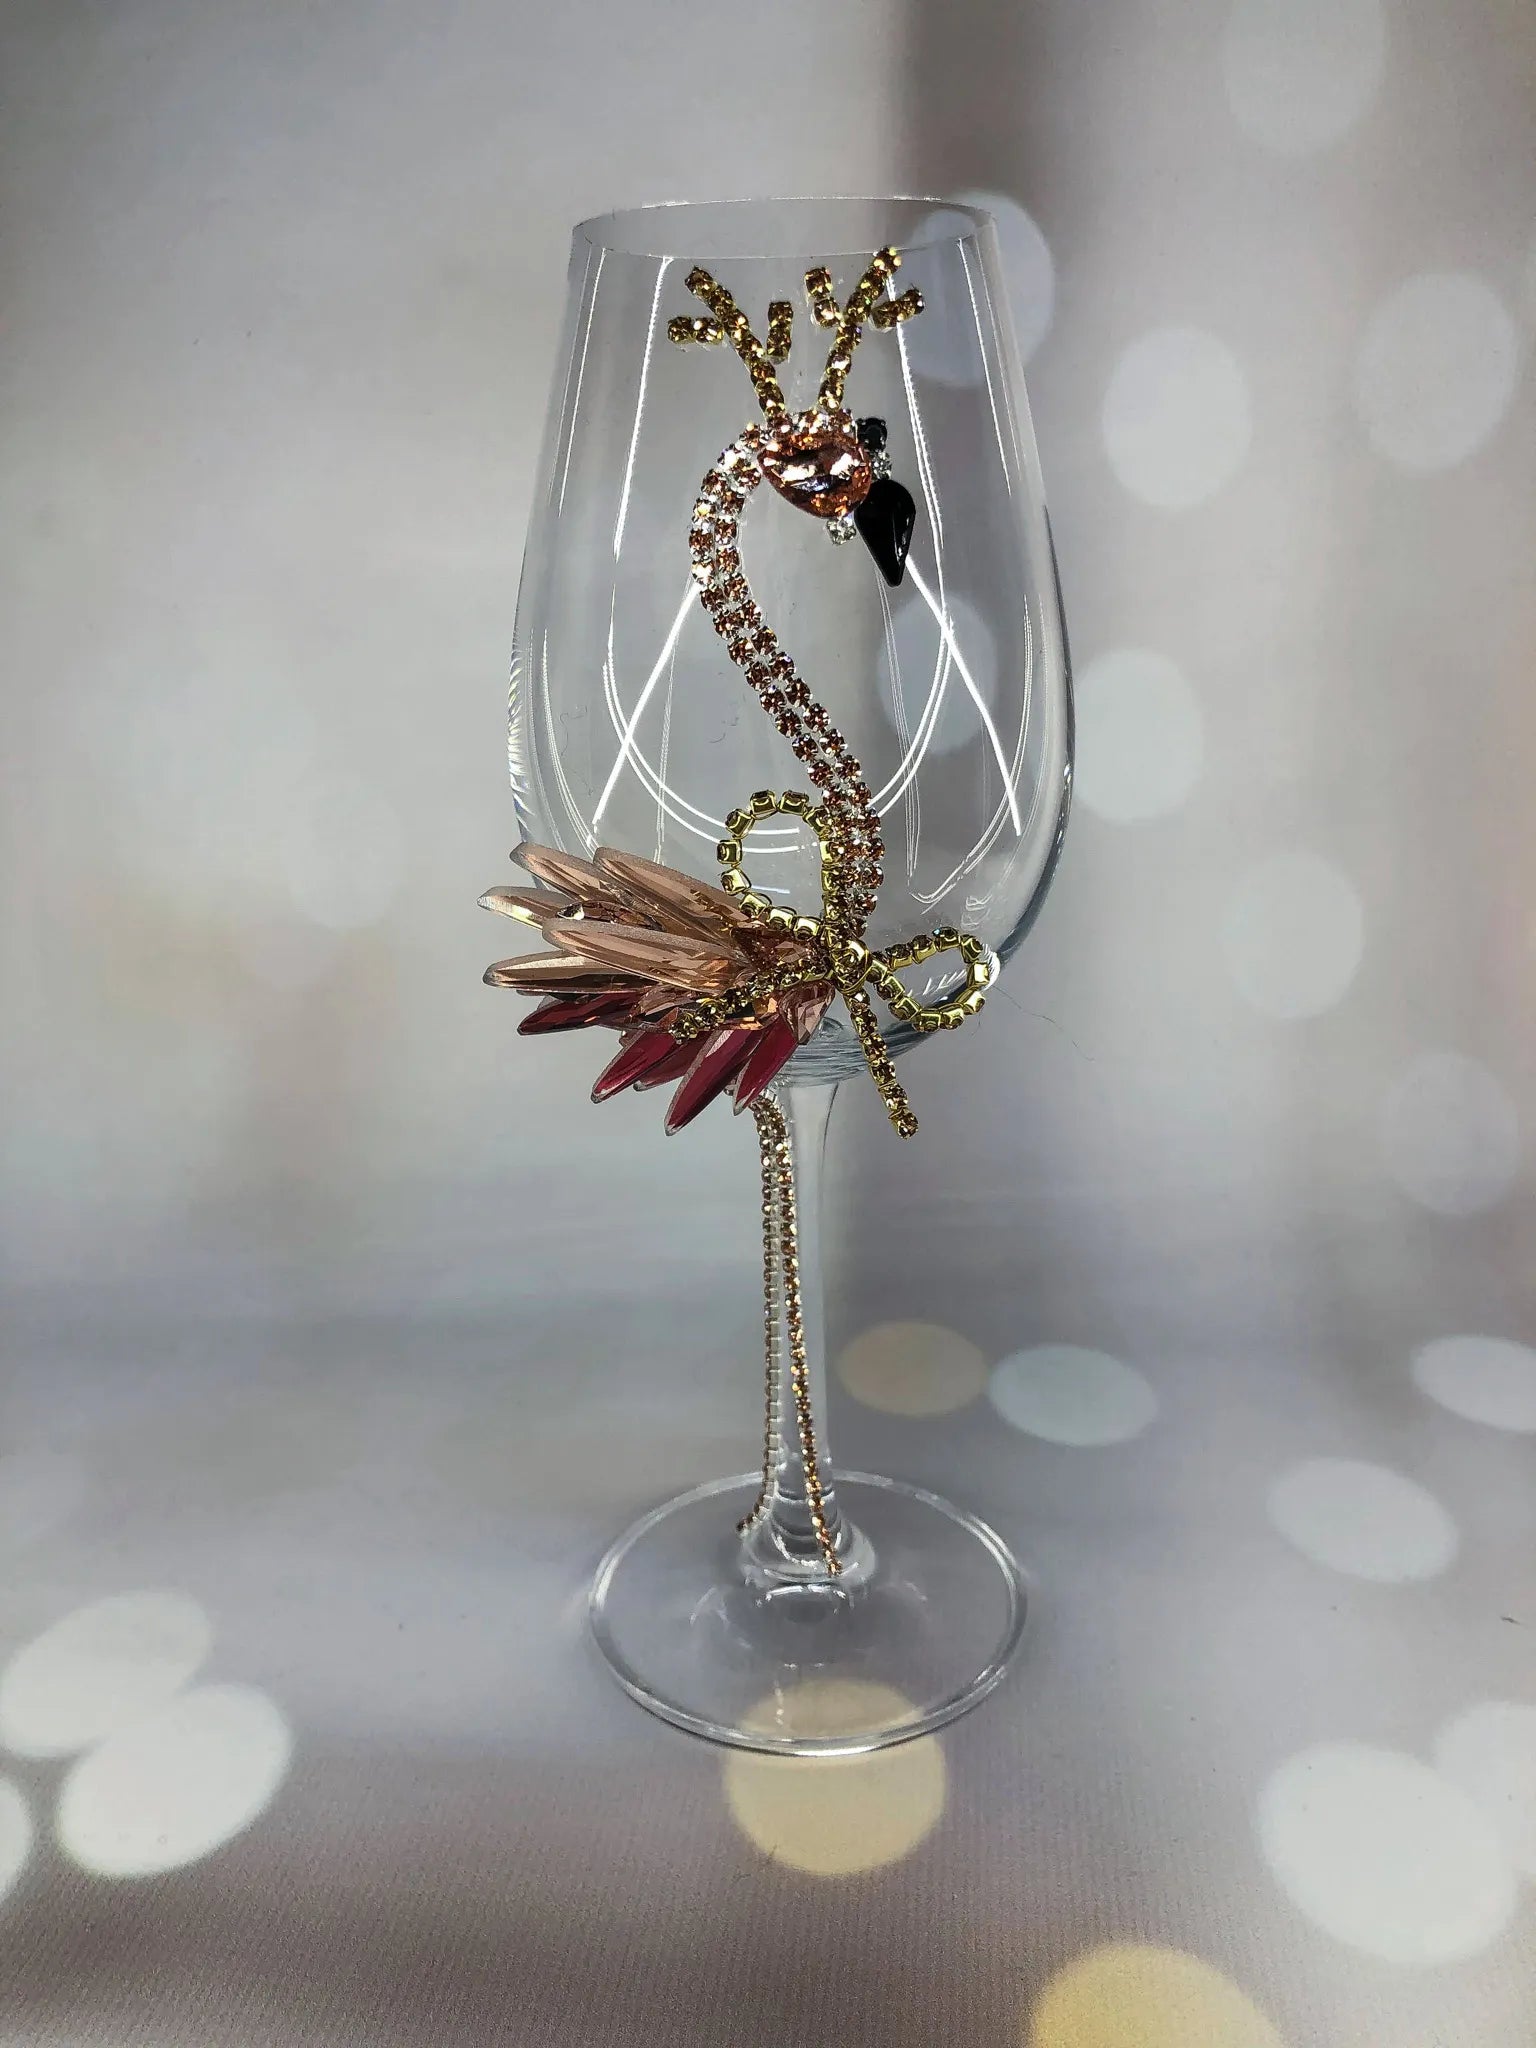 Elegant glass with flamingo and scarf design